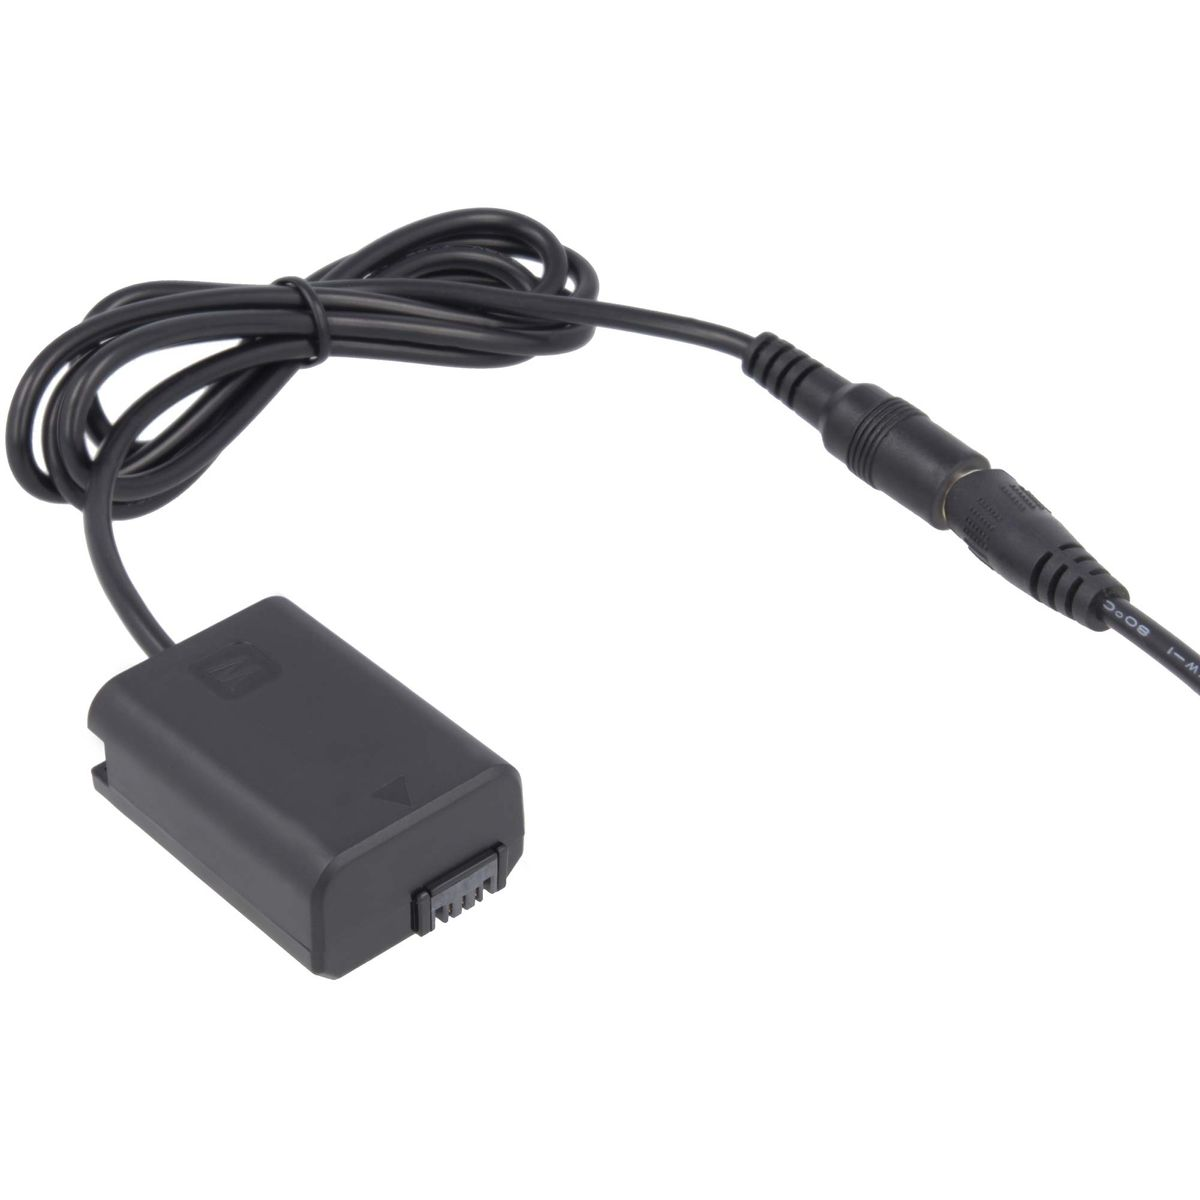 Adapter Angabe mit Sony, Sony Ladegerät AC-PW20 kompatibel + keine USB-C Kuppler AKKU-KING